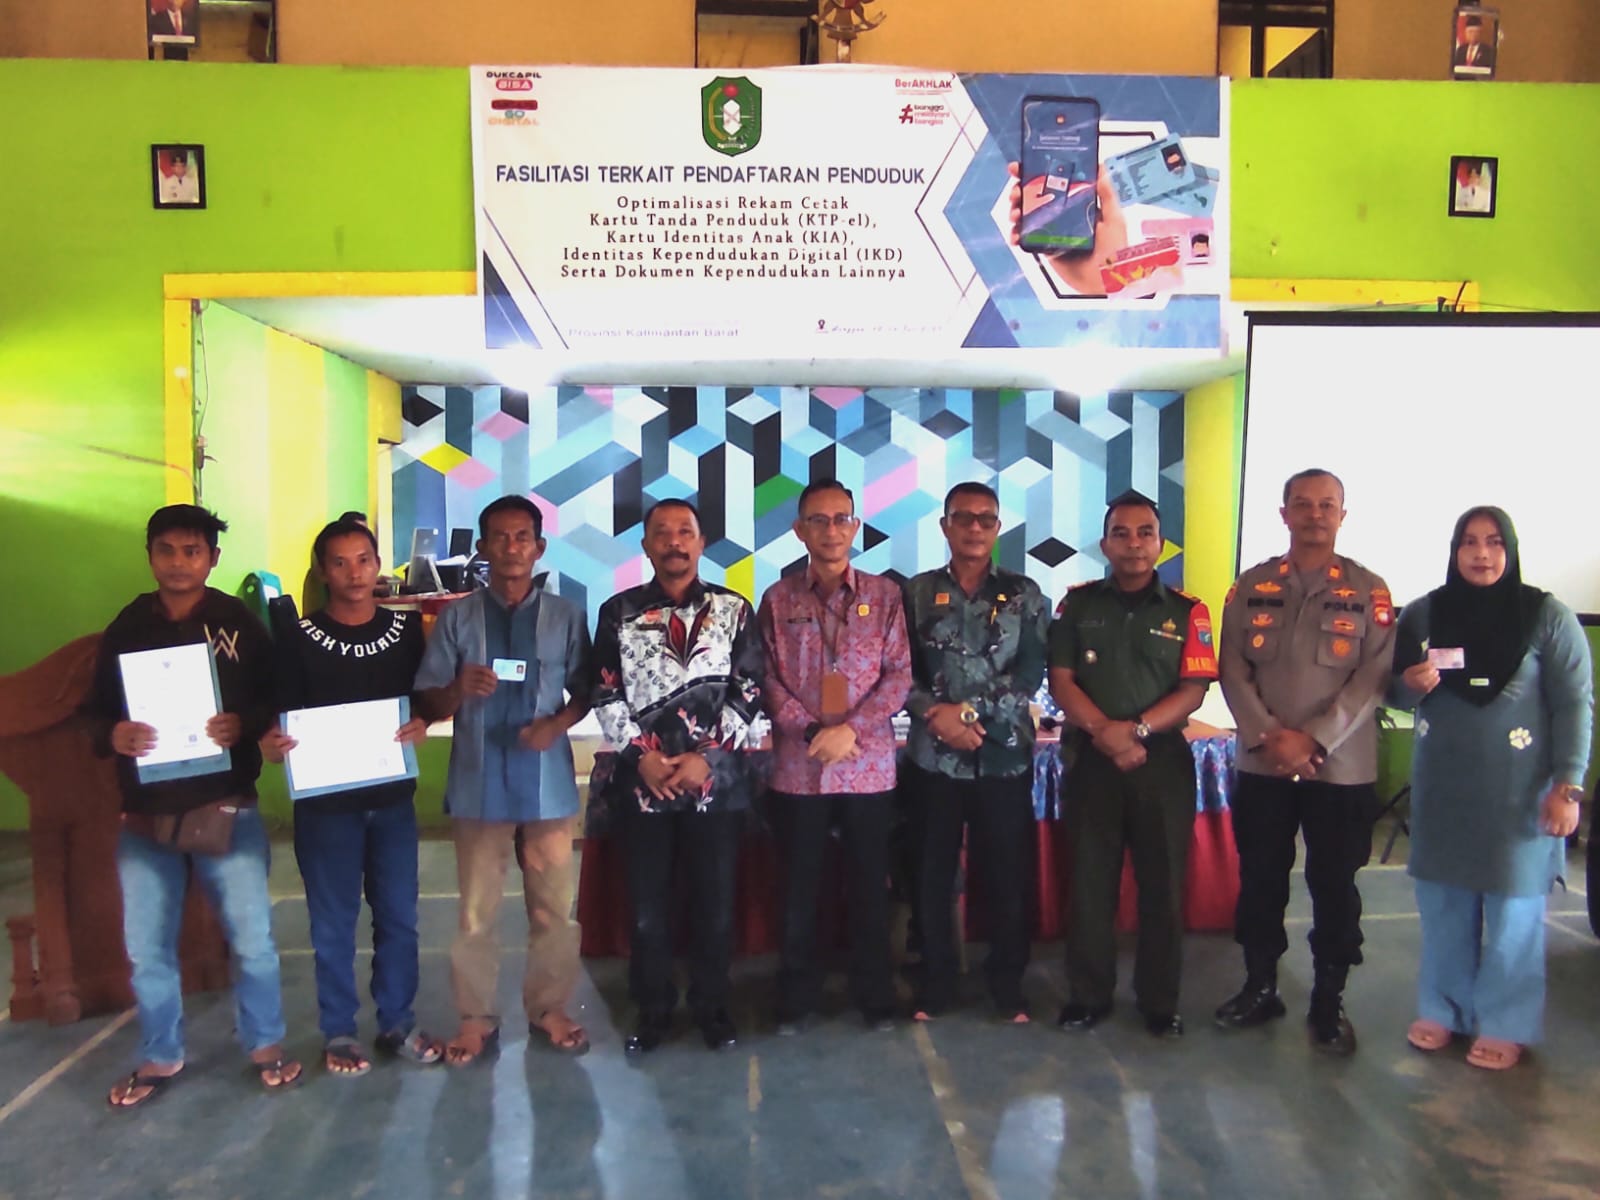 Fasilitasi terkait Pendaftaran Penduduk, Disdukcapil Kabupaten Sanggau bersama Disdukcapil Provinsi Kalbar lakukan pelayanan di Kecamatan Tayan Hilir